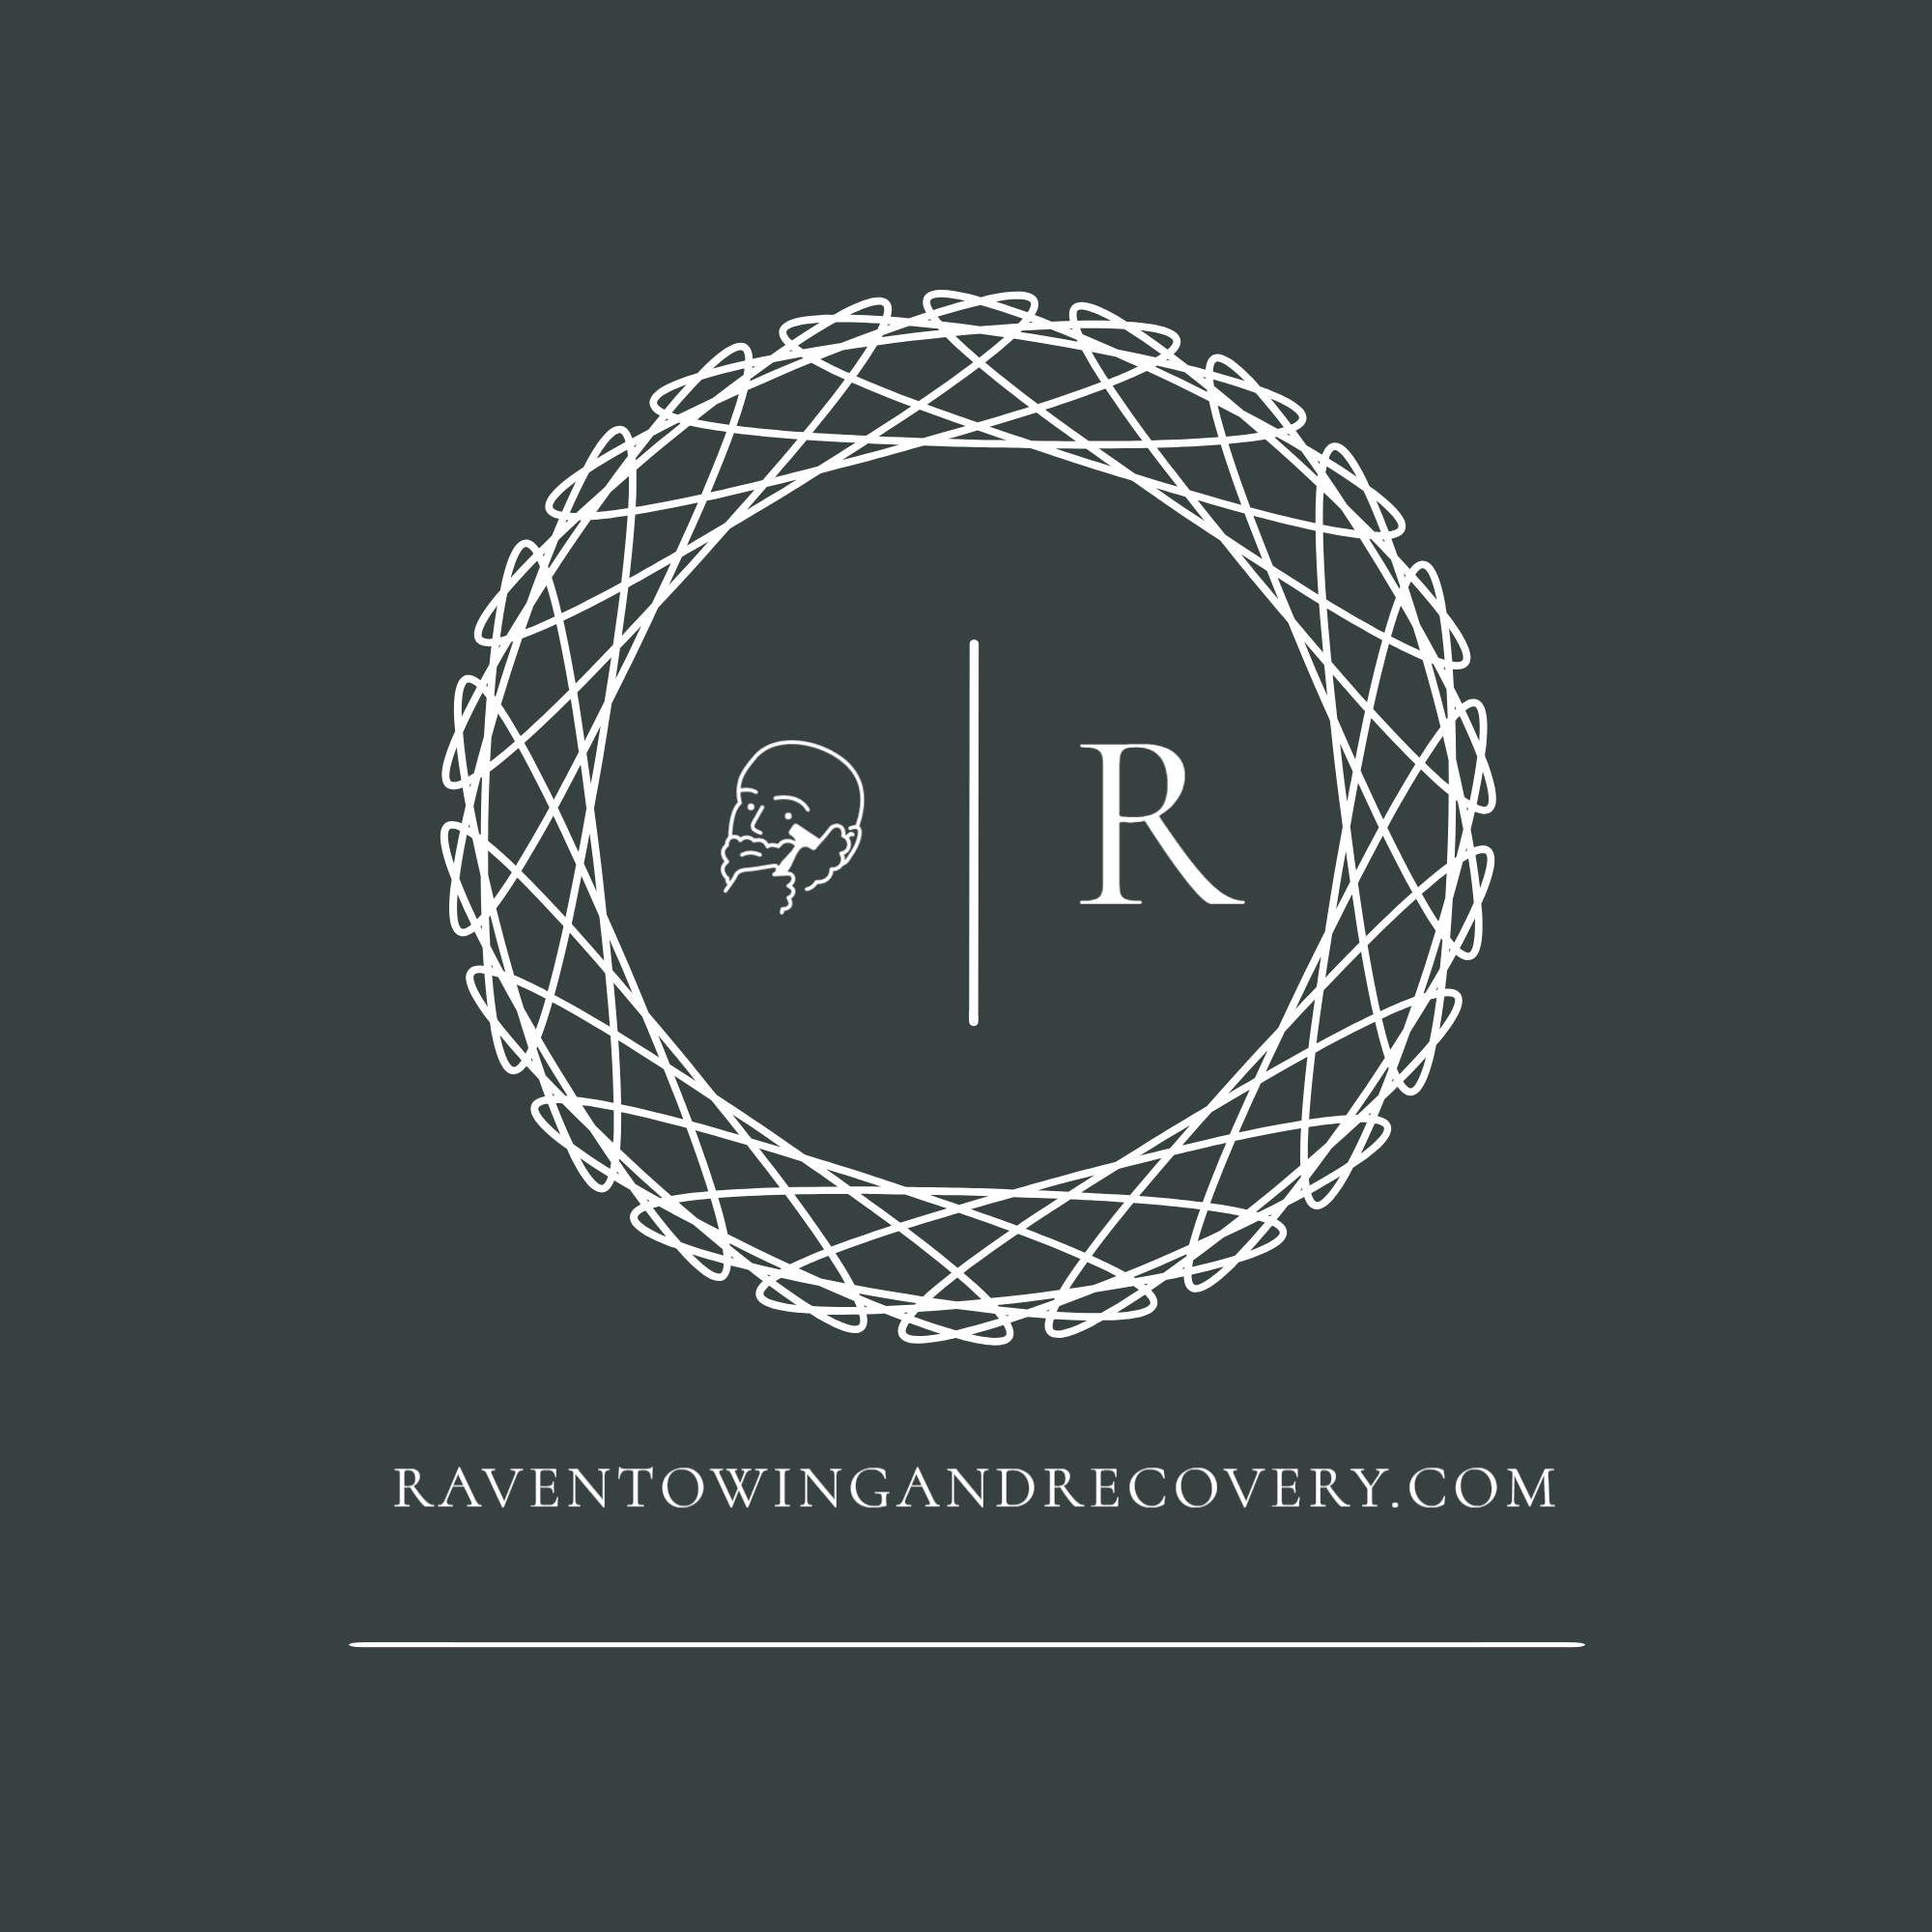 raventowingandrecovery.com